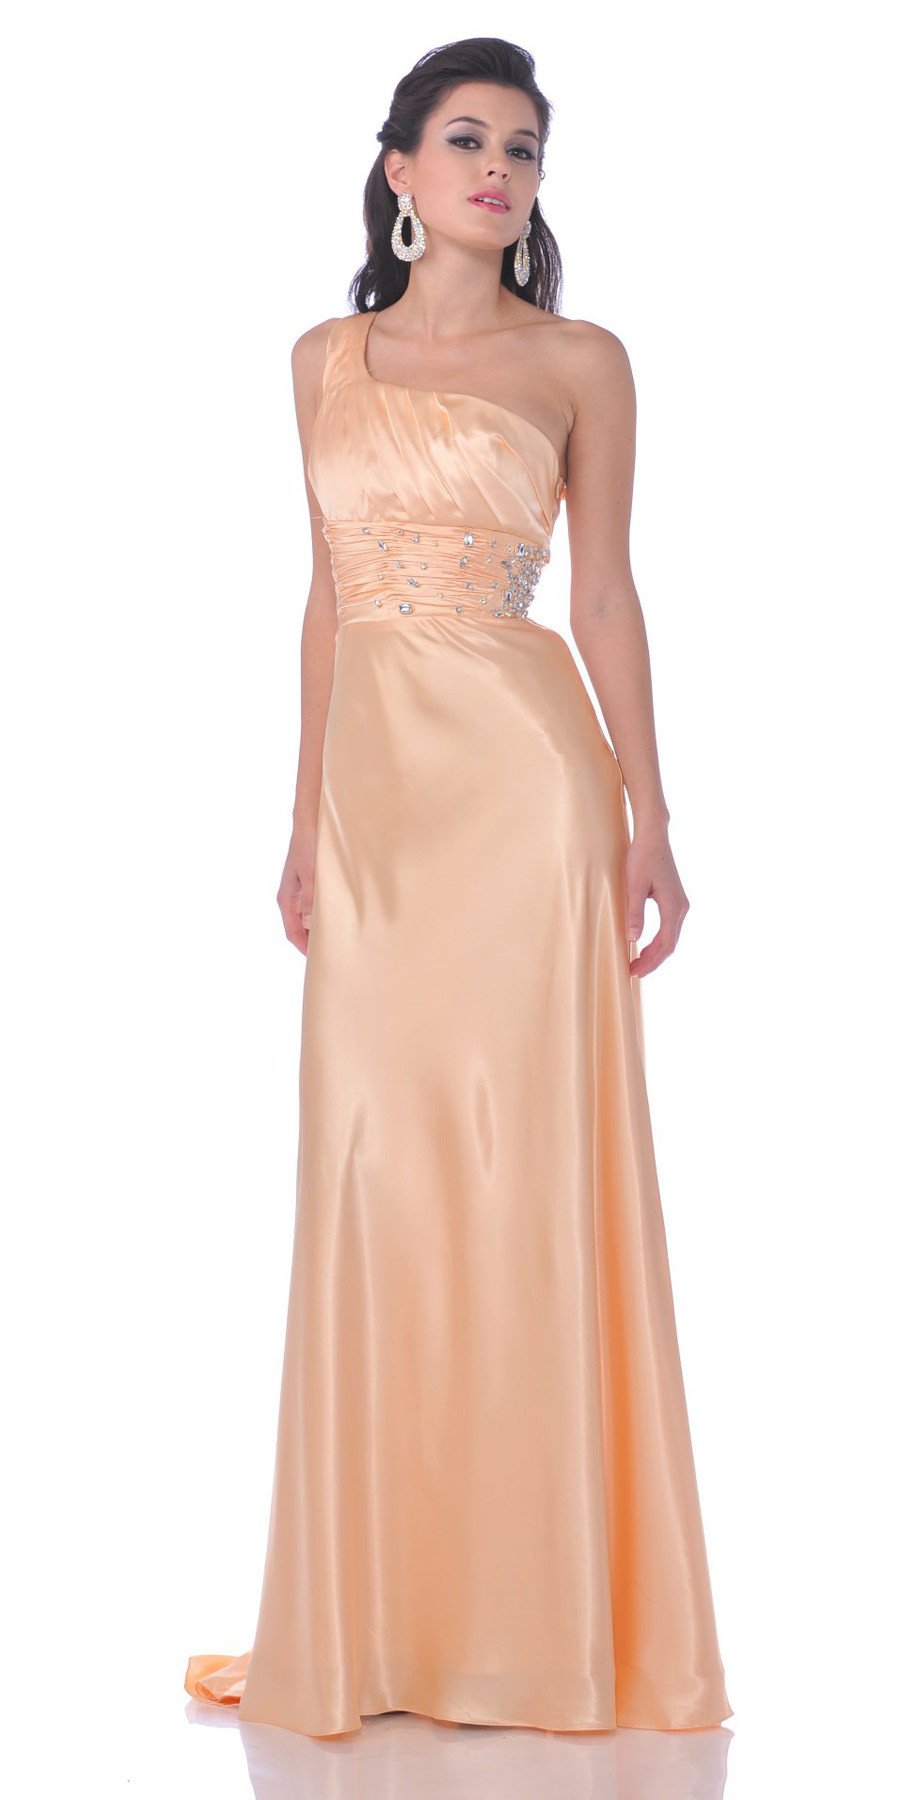  CLEARANCE  Gold Formal  Dress  Prom  Satin One Shoulder 